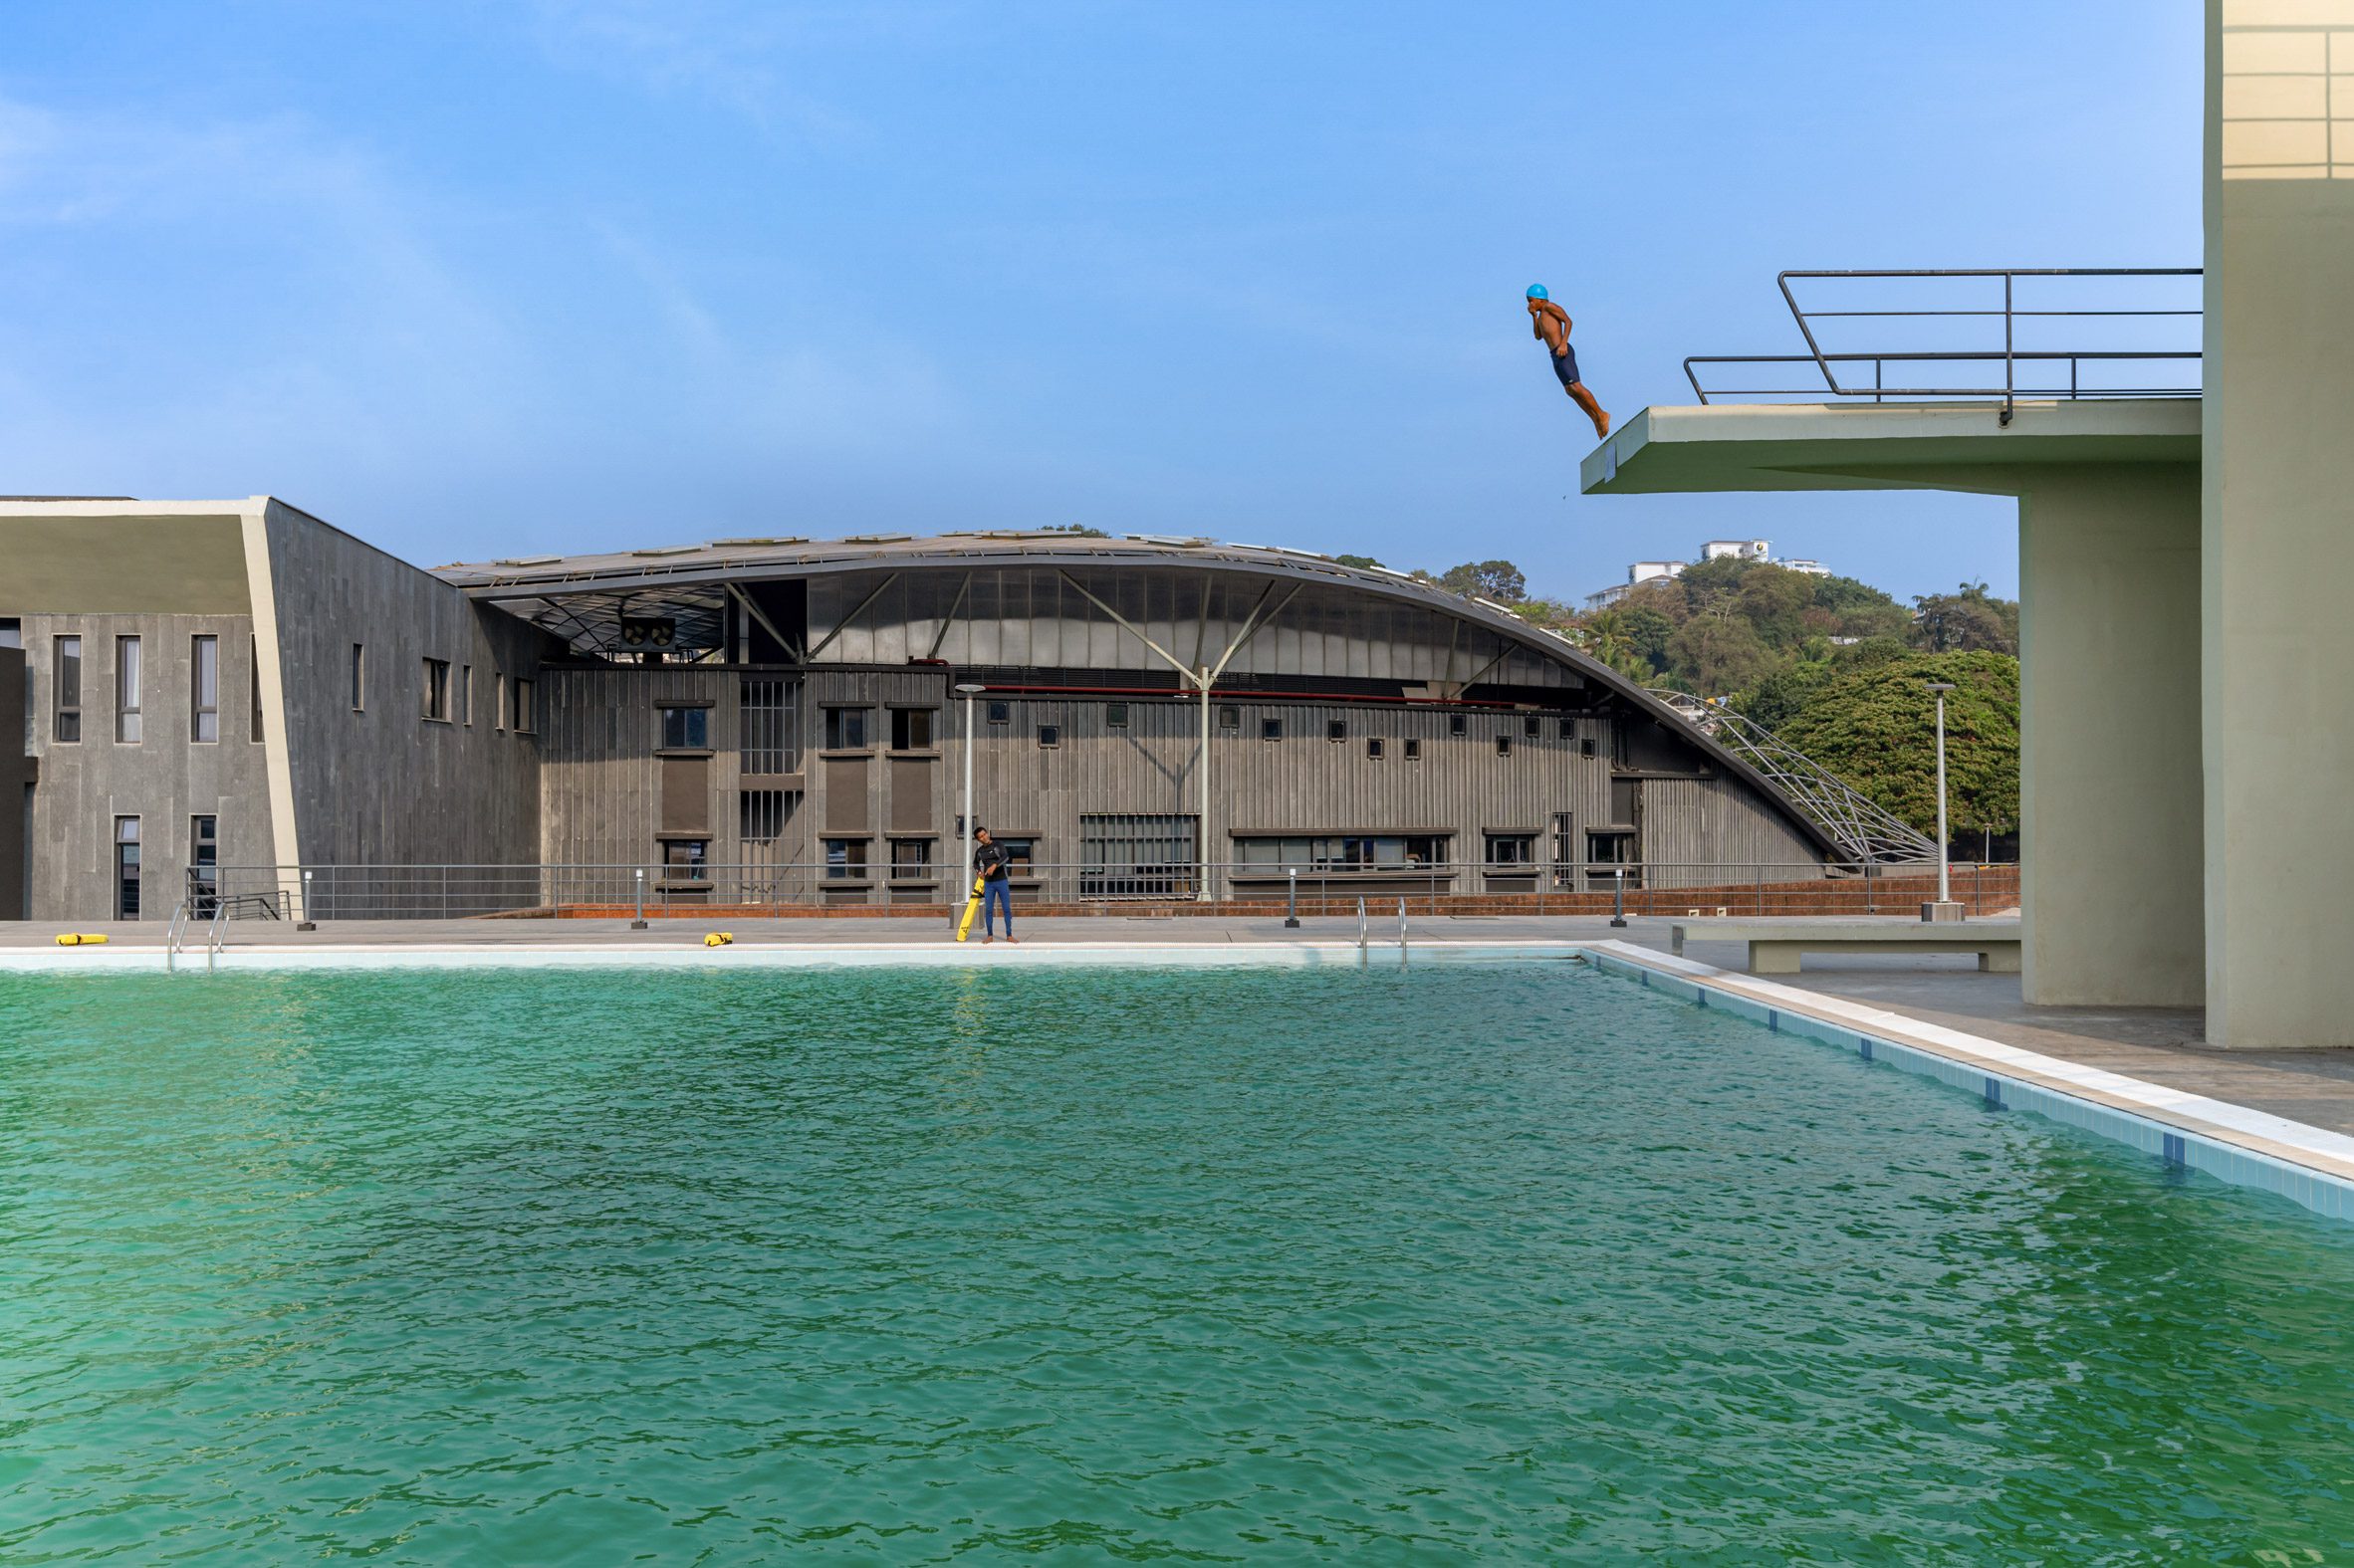 Swimming pool at national sports centre by MOFA Studios